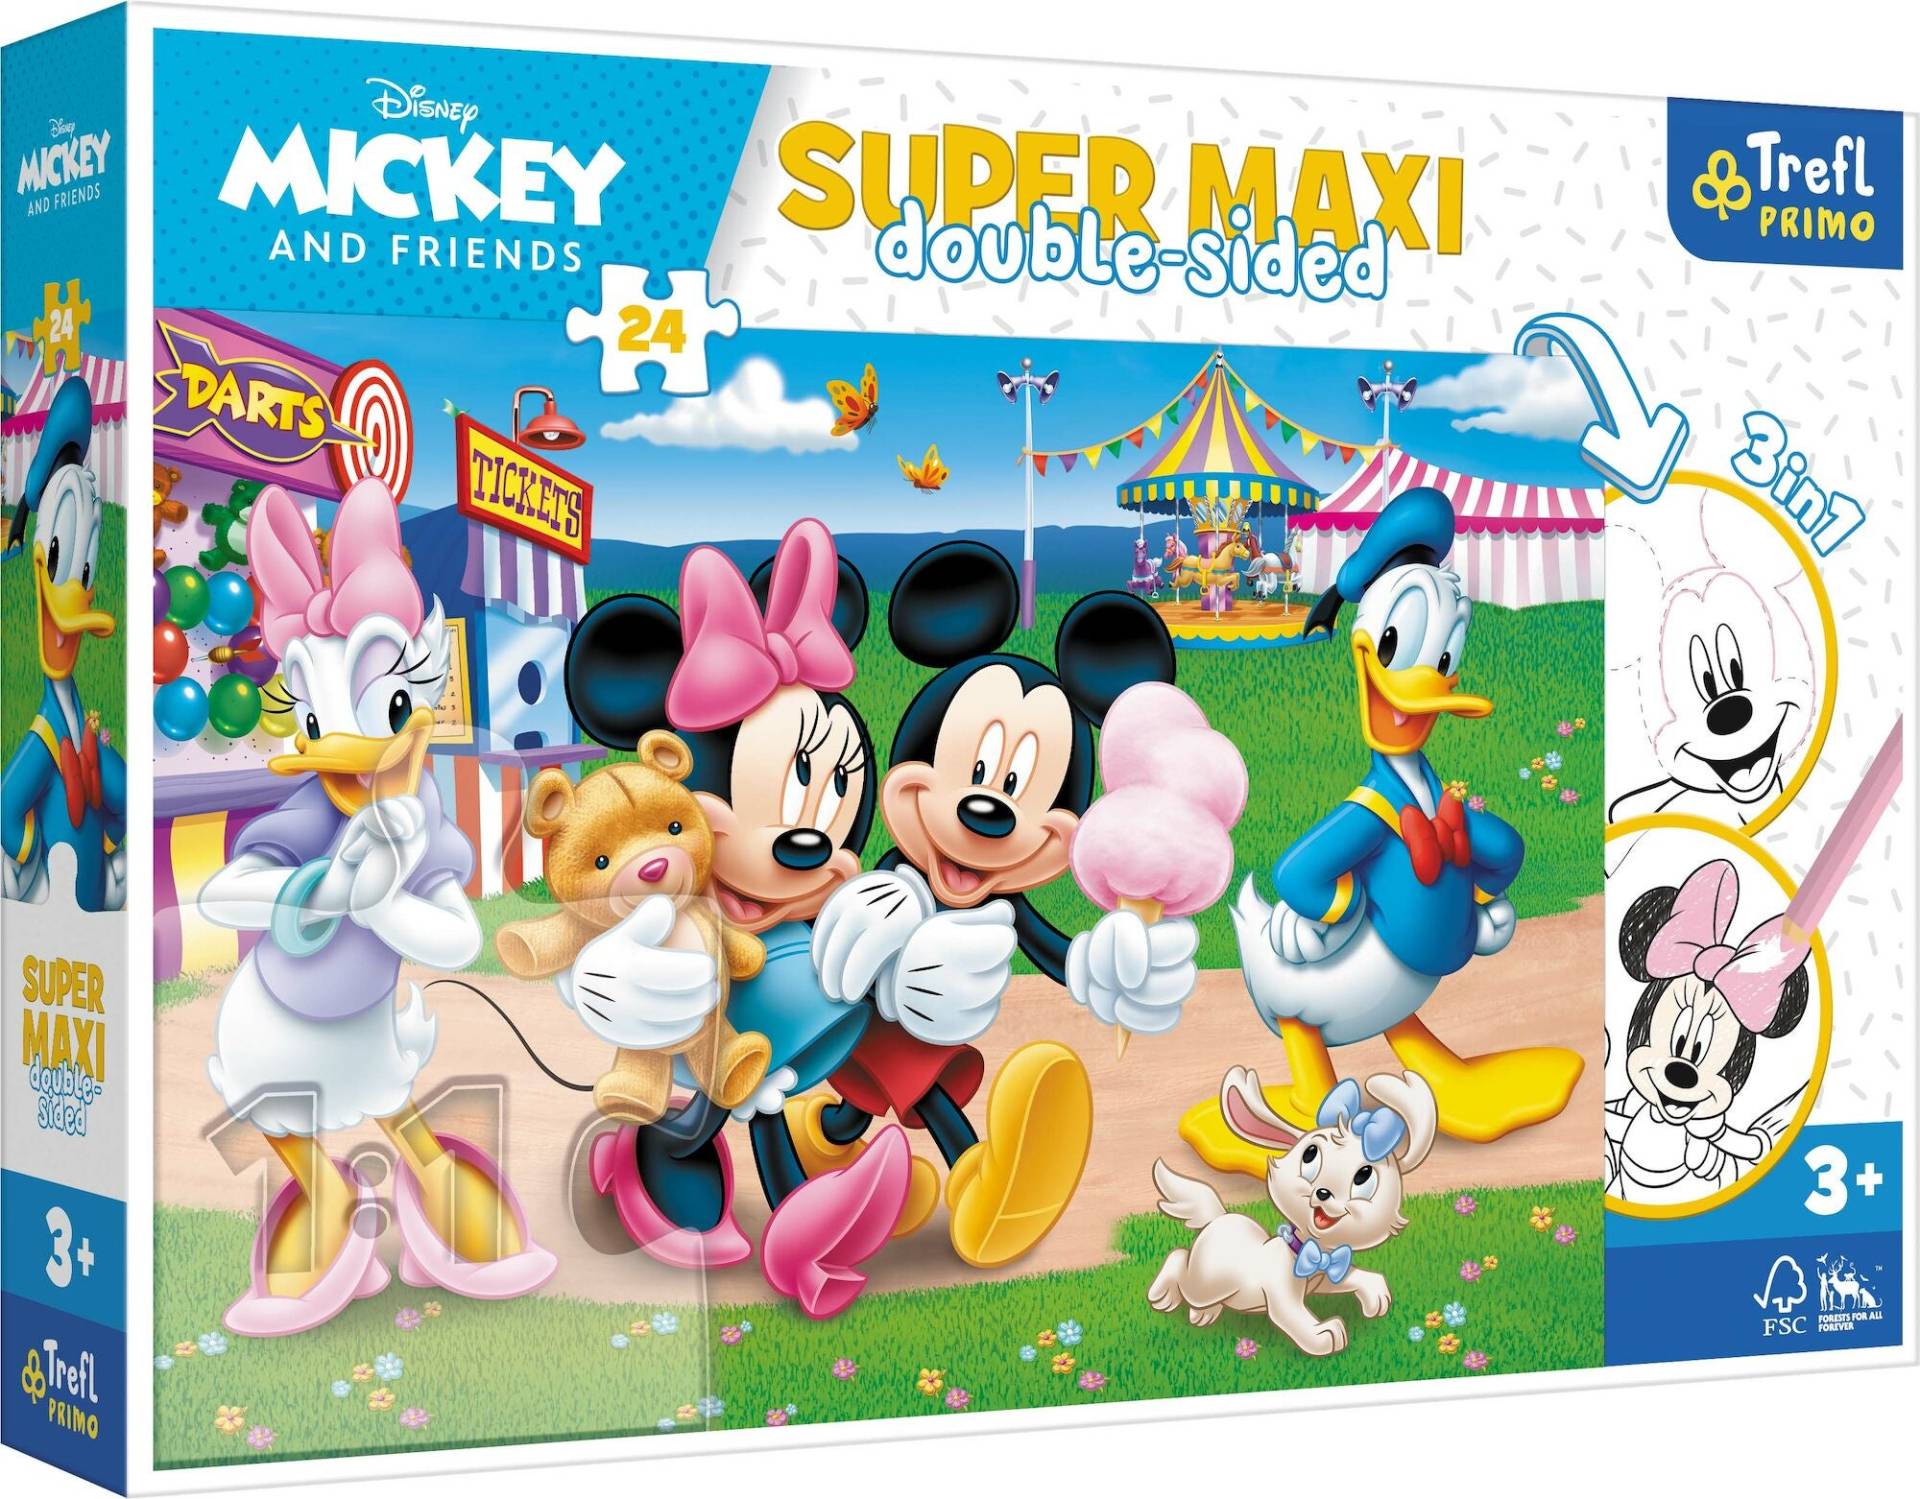 Trefl Primo Micky Maus Super Maxi Puzzle 24 Teile von Disney Mickey Mouse